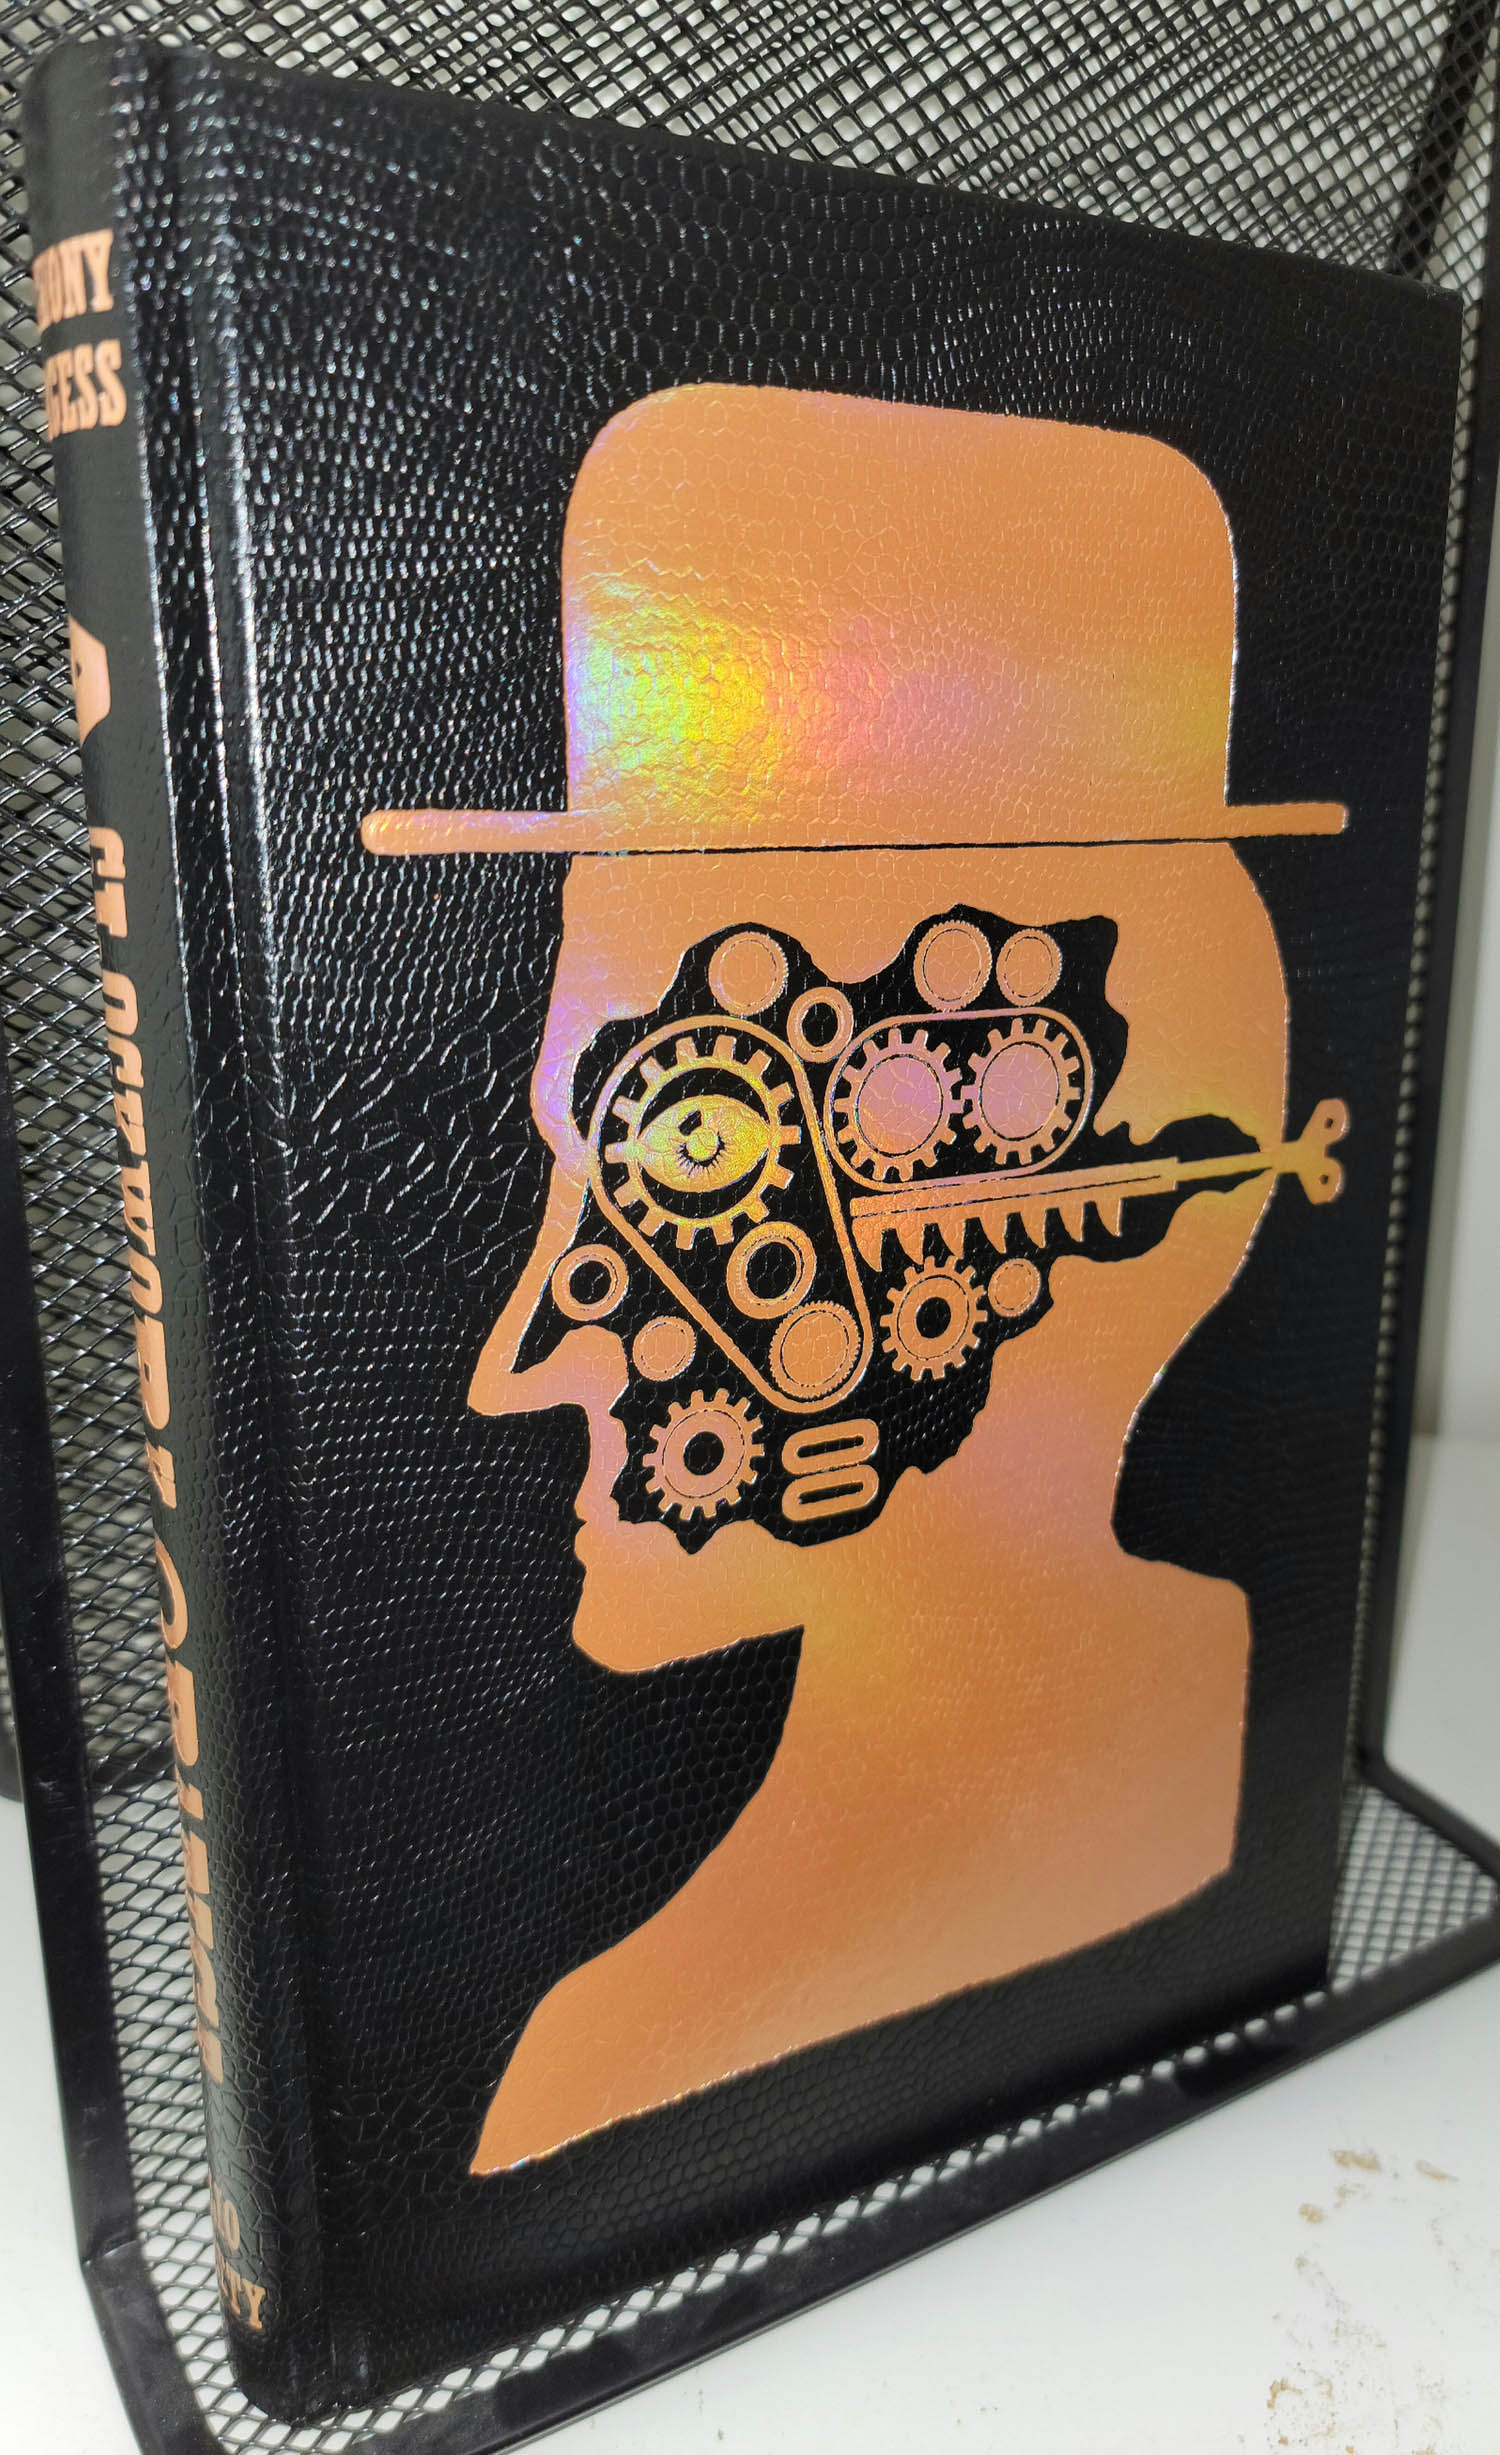 Anthony Burgess, Stanley Kubrick and A Clockwork Orange [Book]